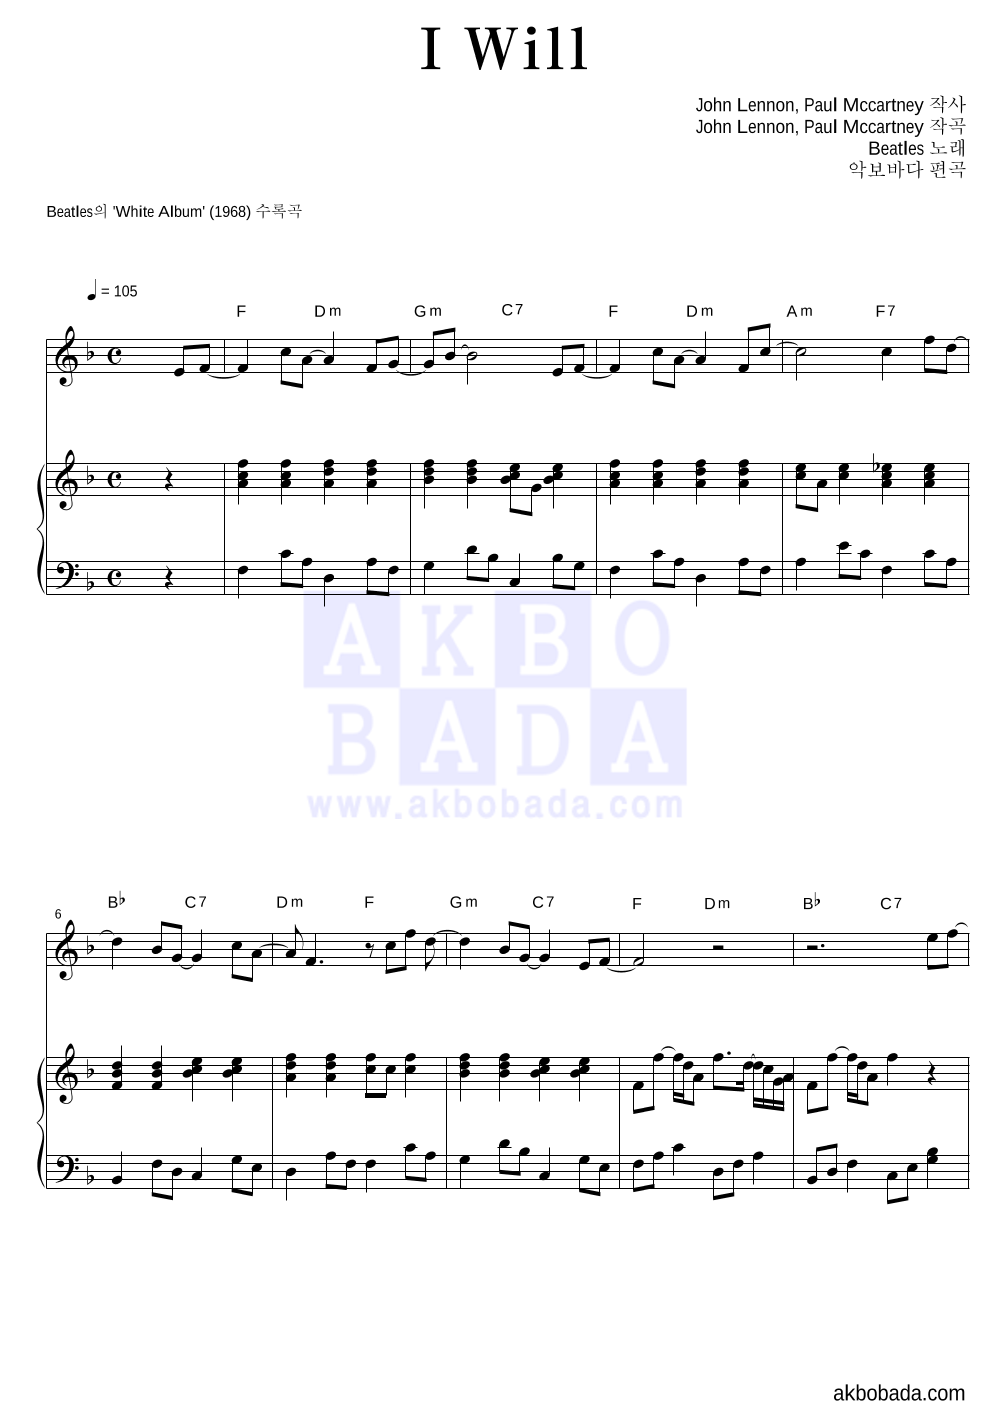 Beatles - I Will 플룻&피아노 악보 